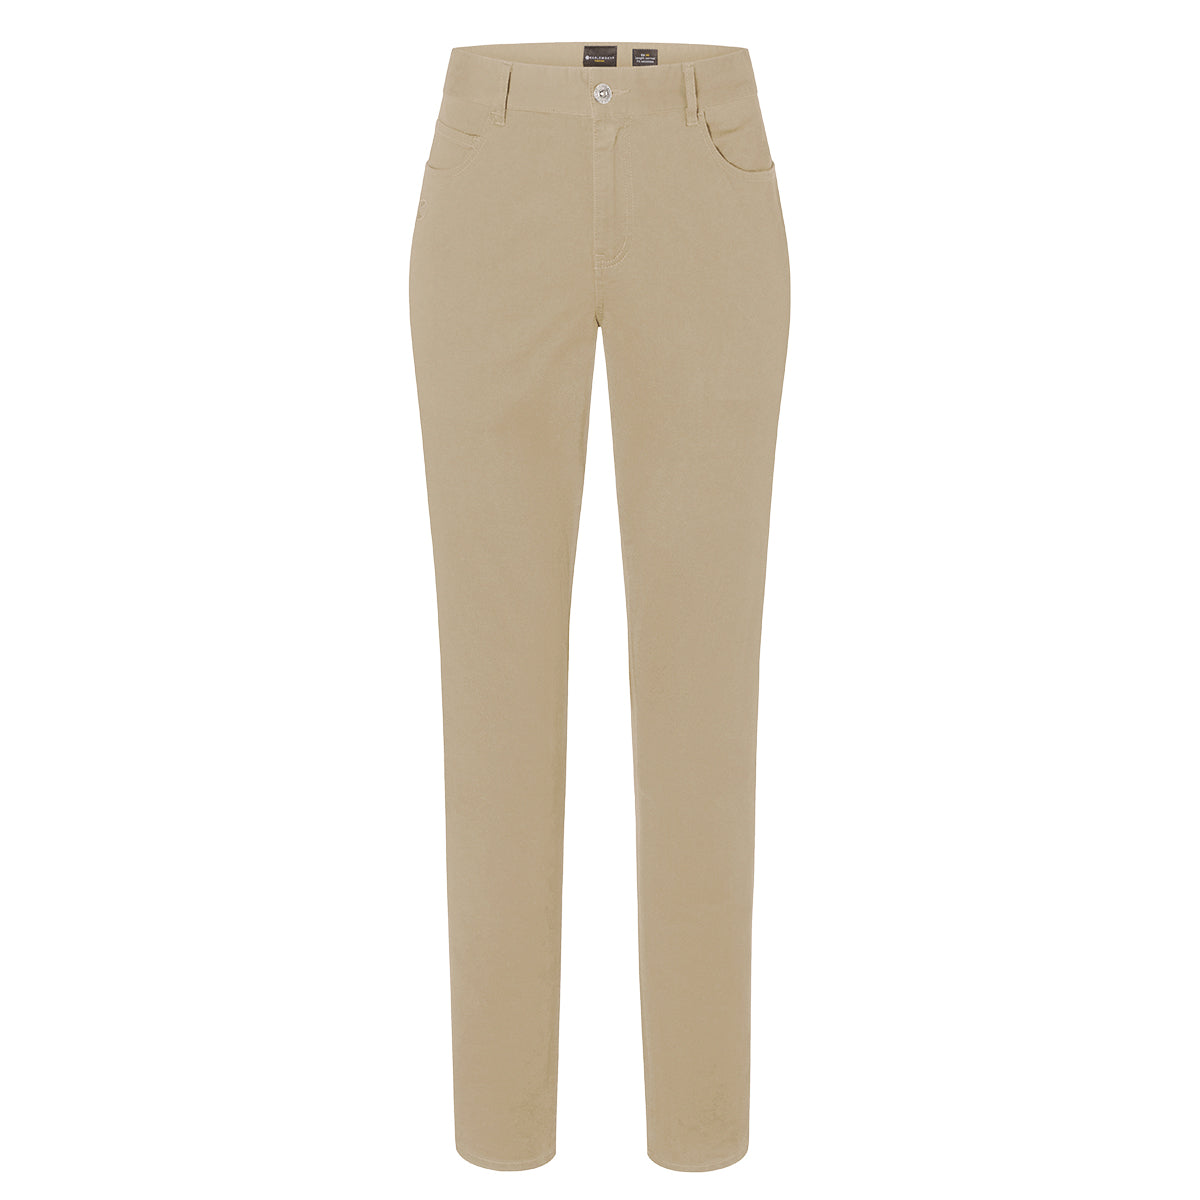 Karlowsky - 5-lomme bukser til damer - Pebble grey - Størrelse: 50